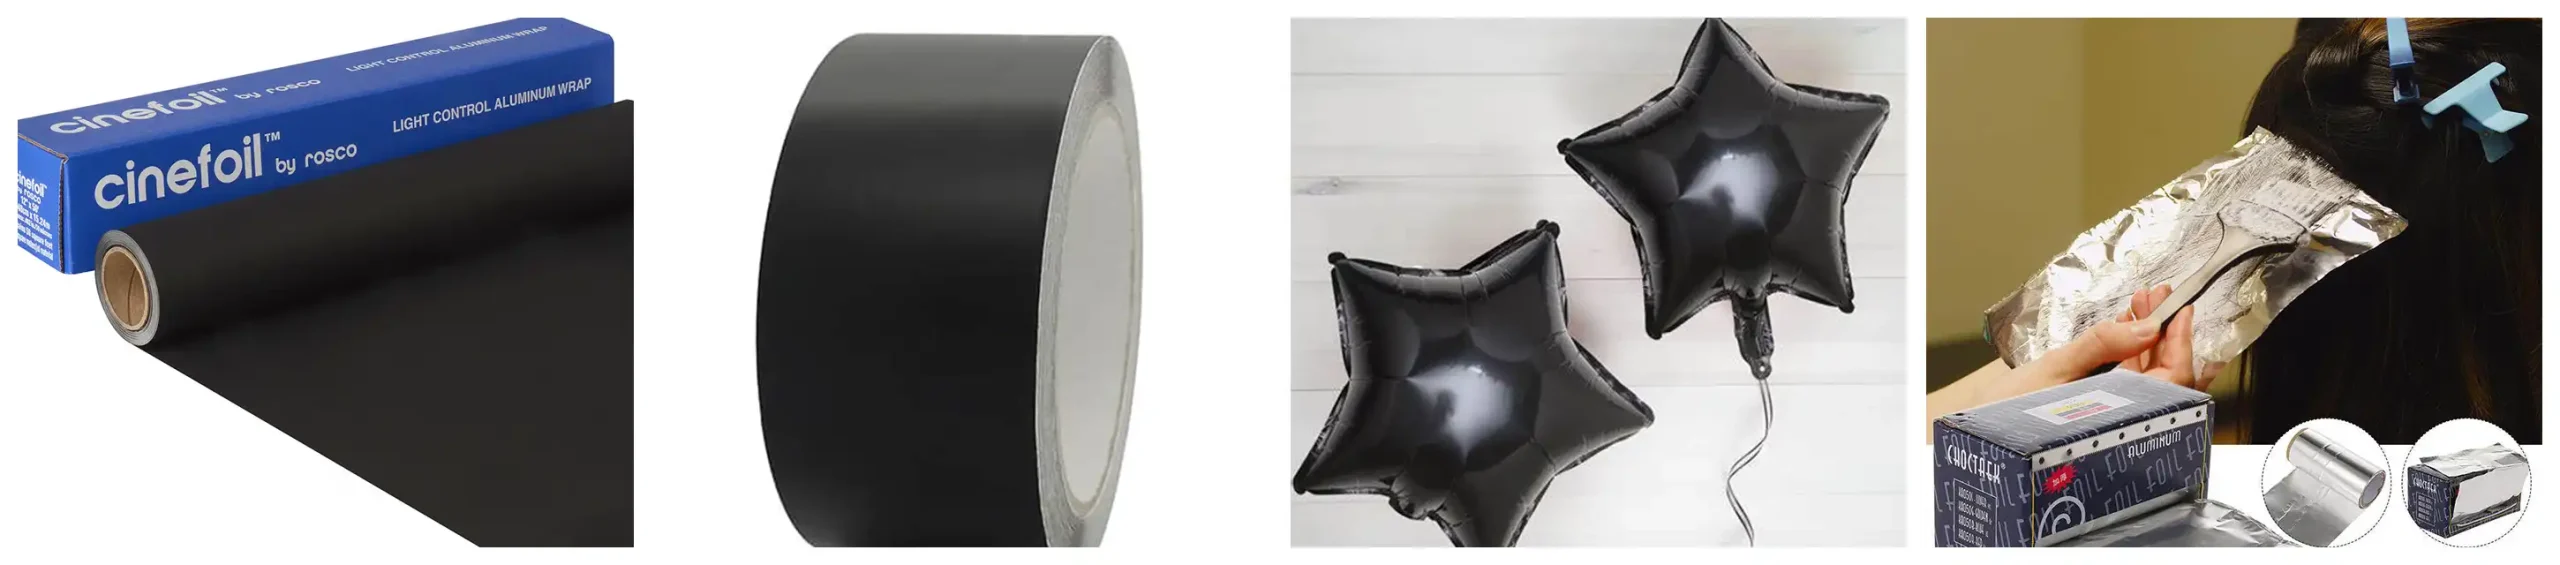 black aluminum foil for hair salons, film and photography sectors, black aluminum foil tape